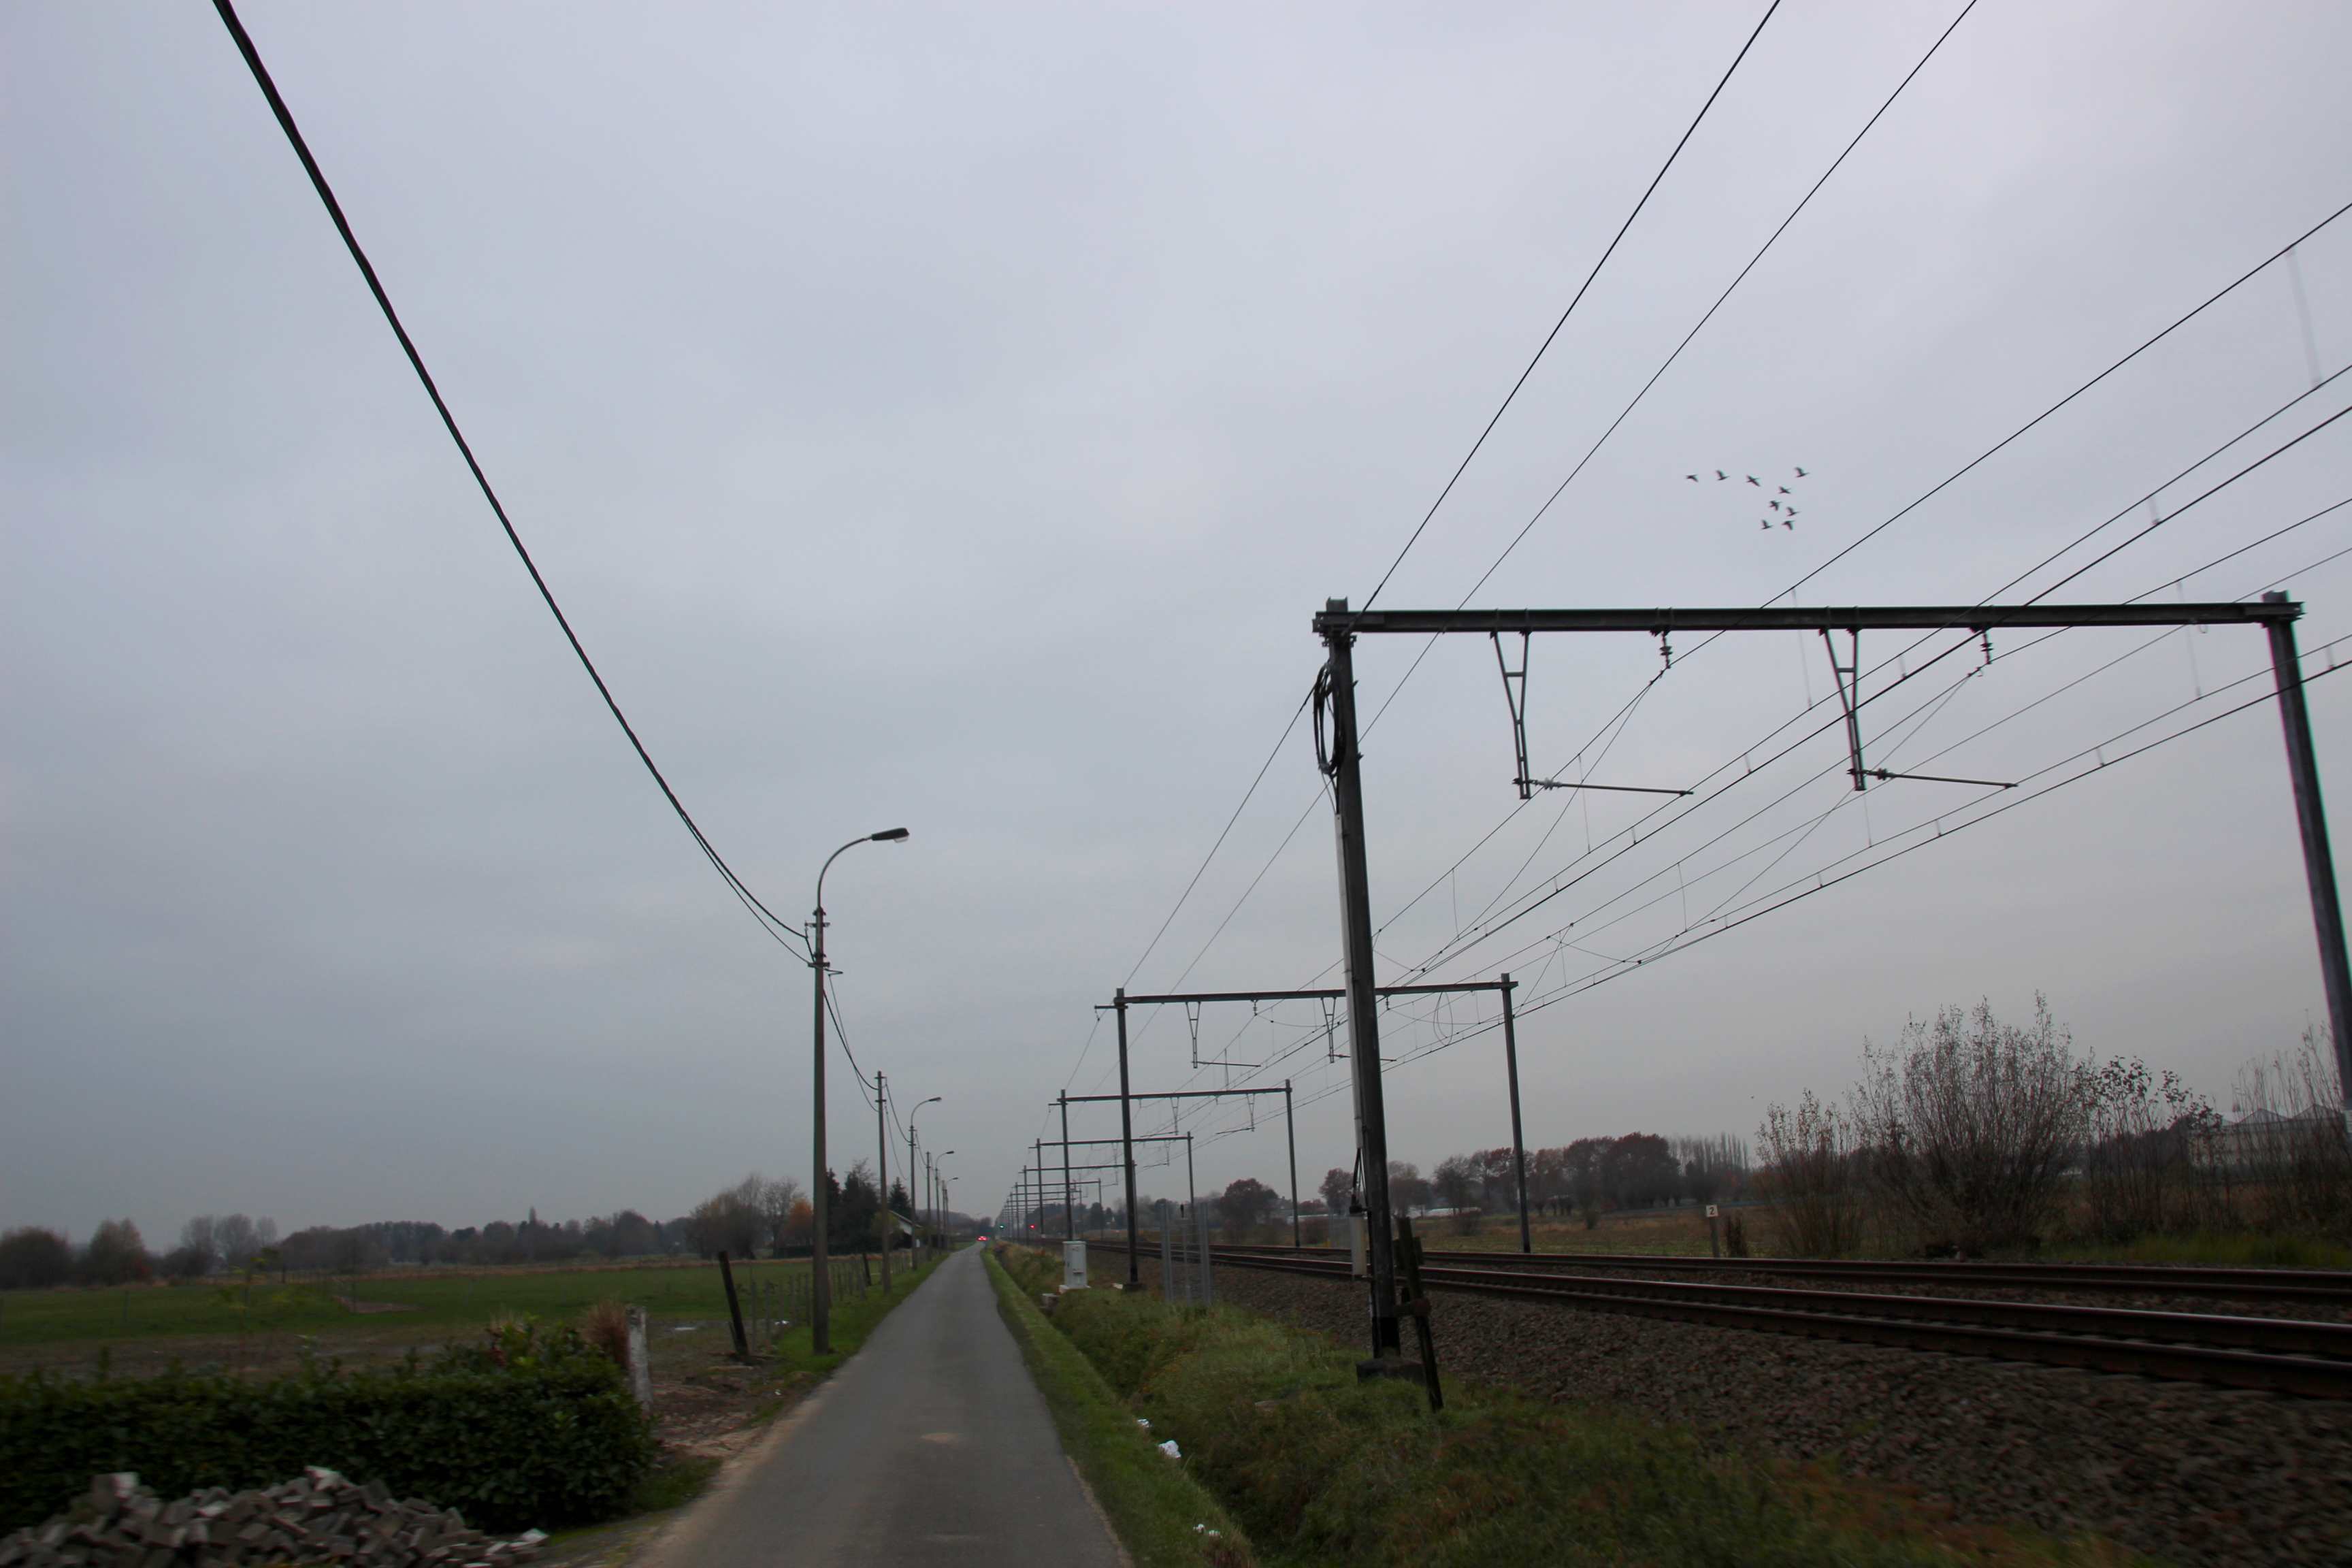 26nov16, Langs de spoorweg, Sint-Martens-Latem